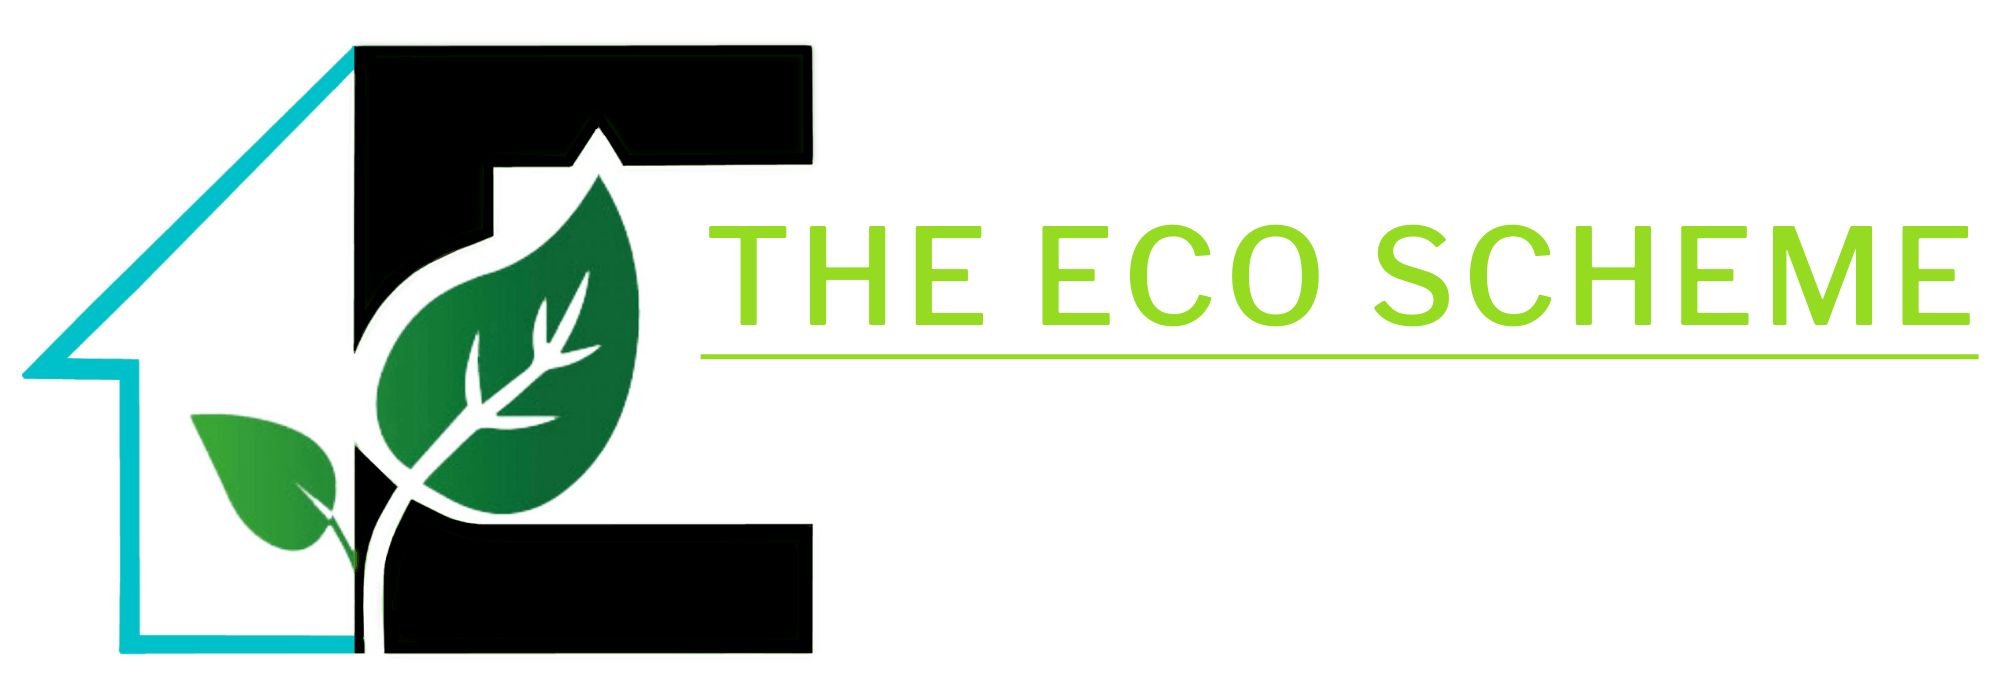 The ECOscheme logo